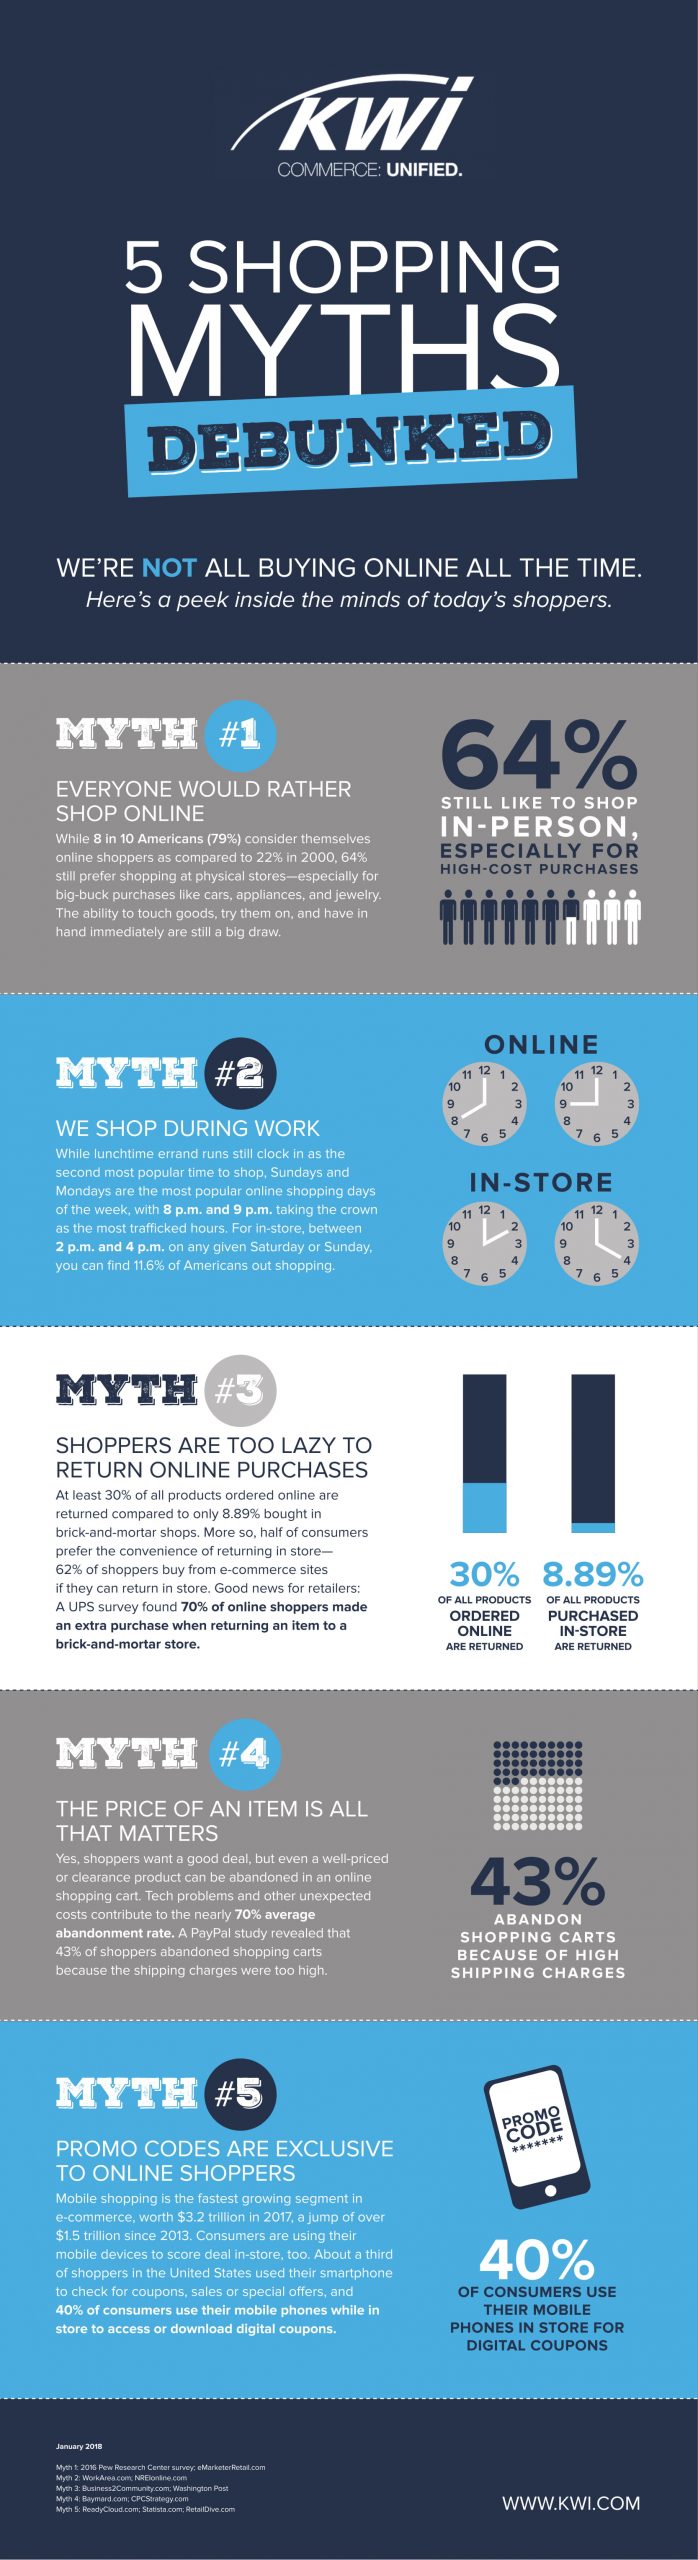 5 Shopping Myths Debunked - Infographic-1.jpg